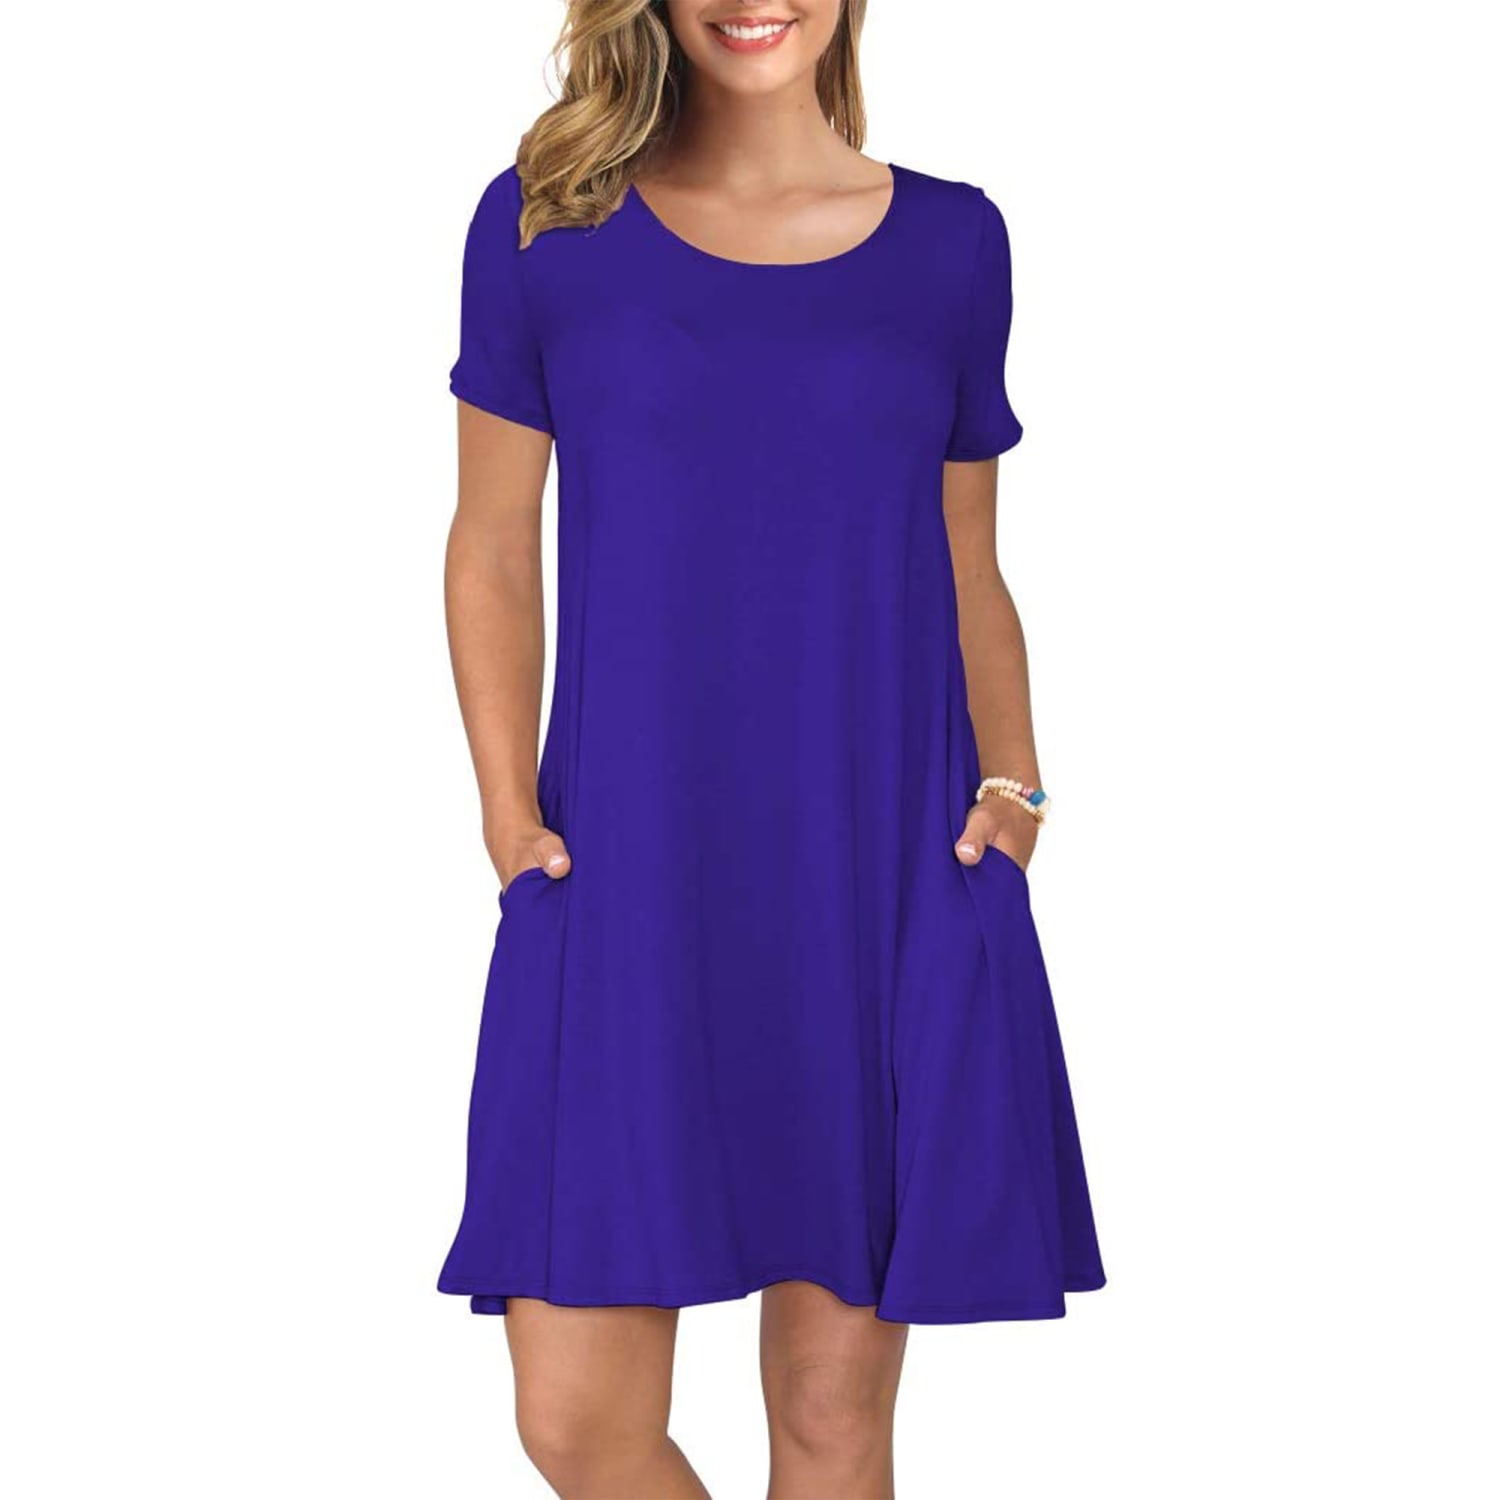 purple shirt dress